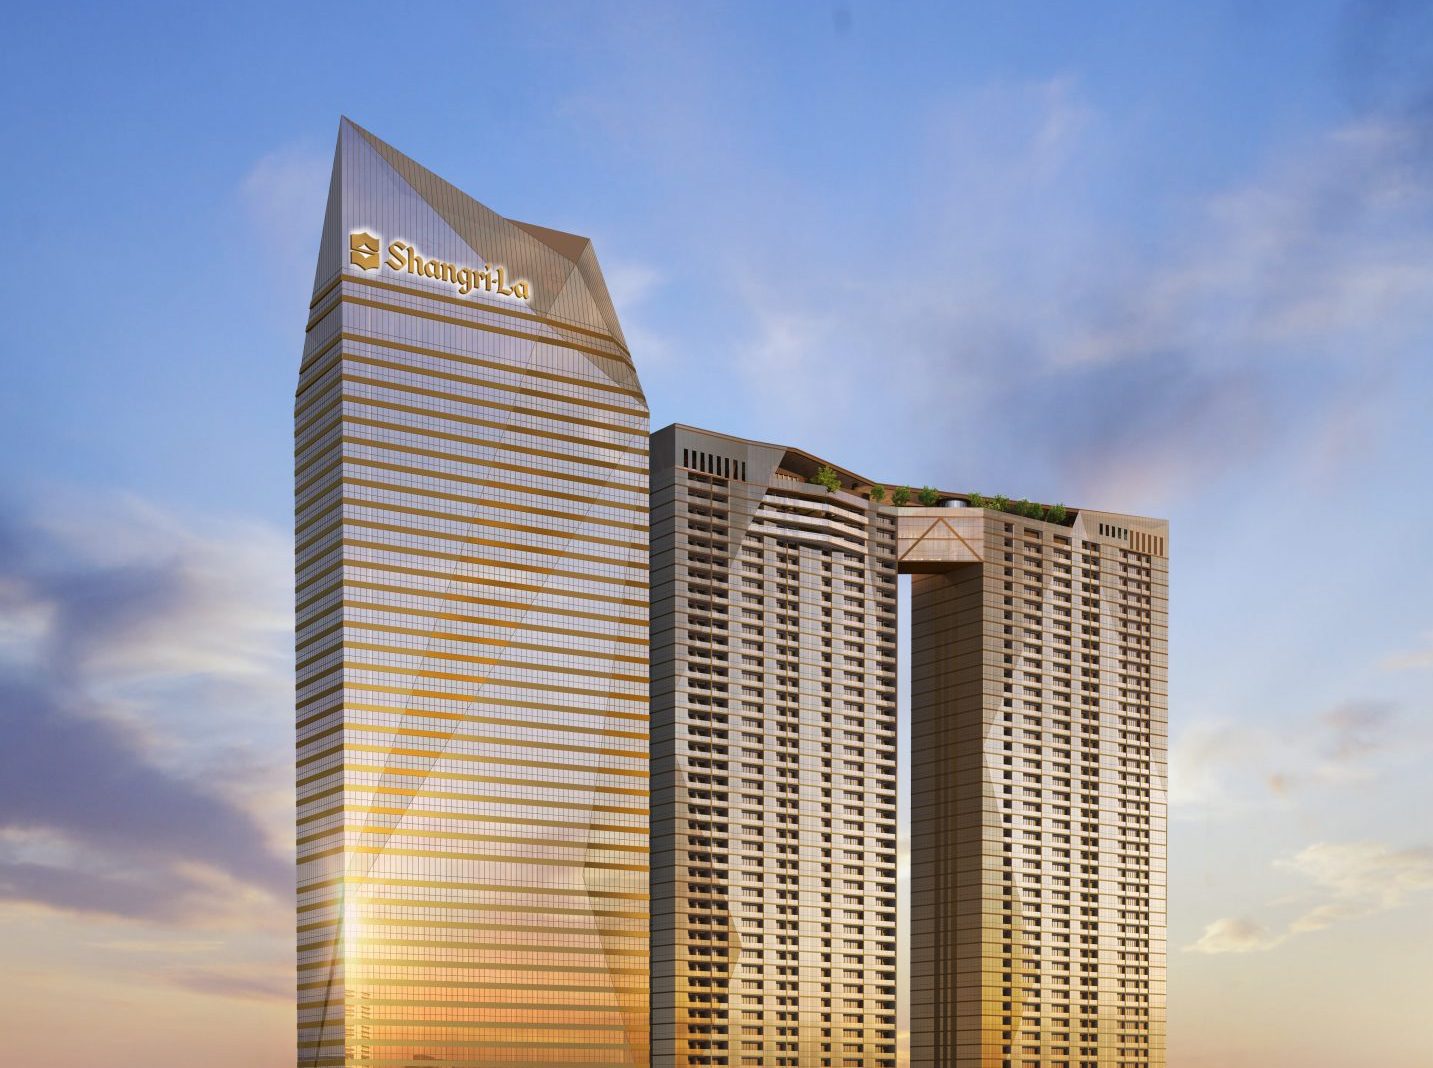 Shangri-La Hotel – Oxley Holdings